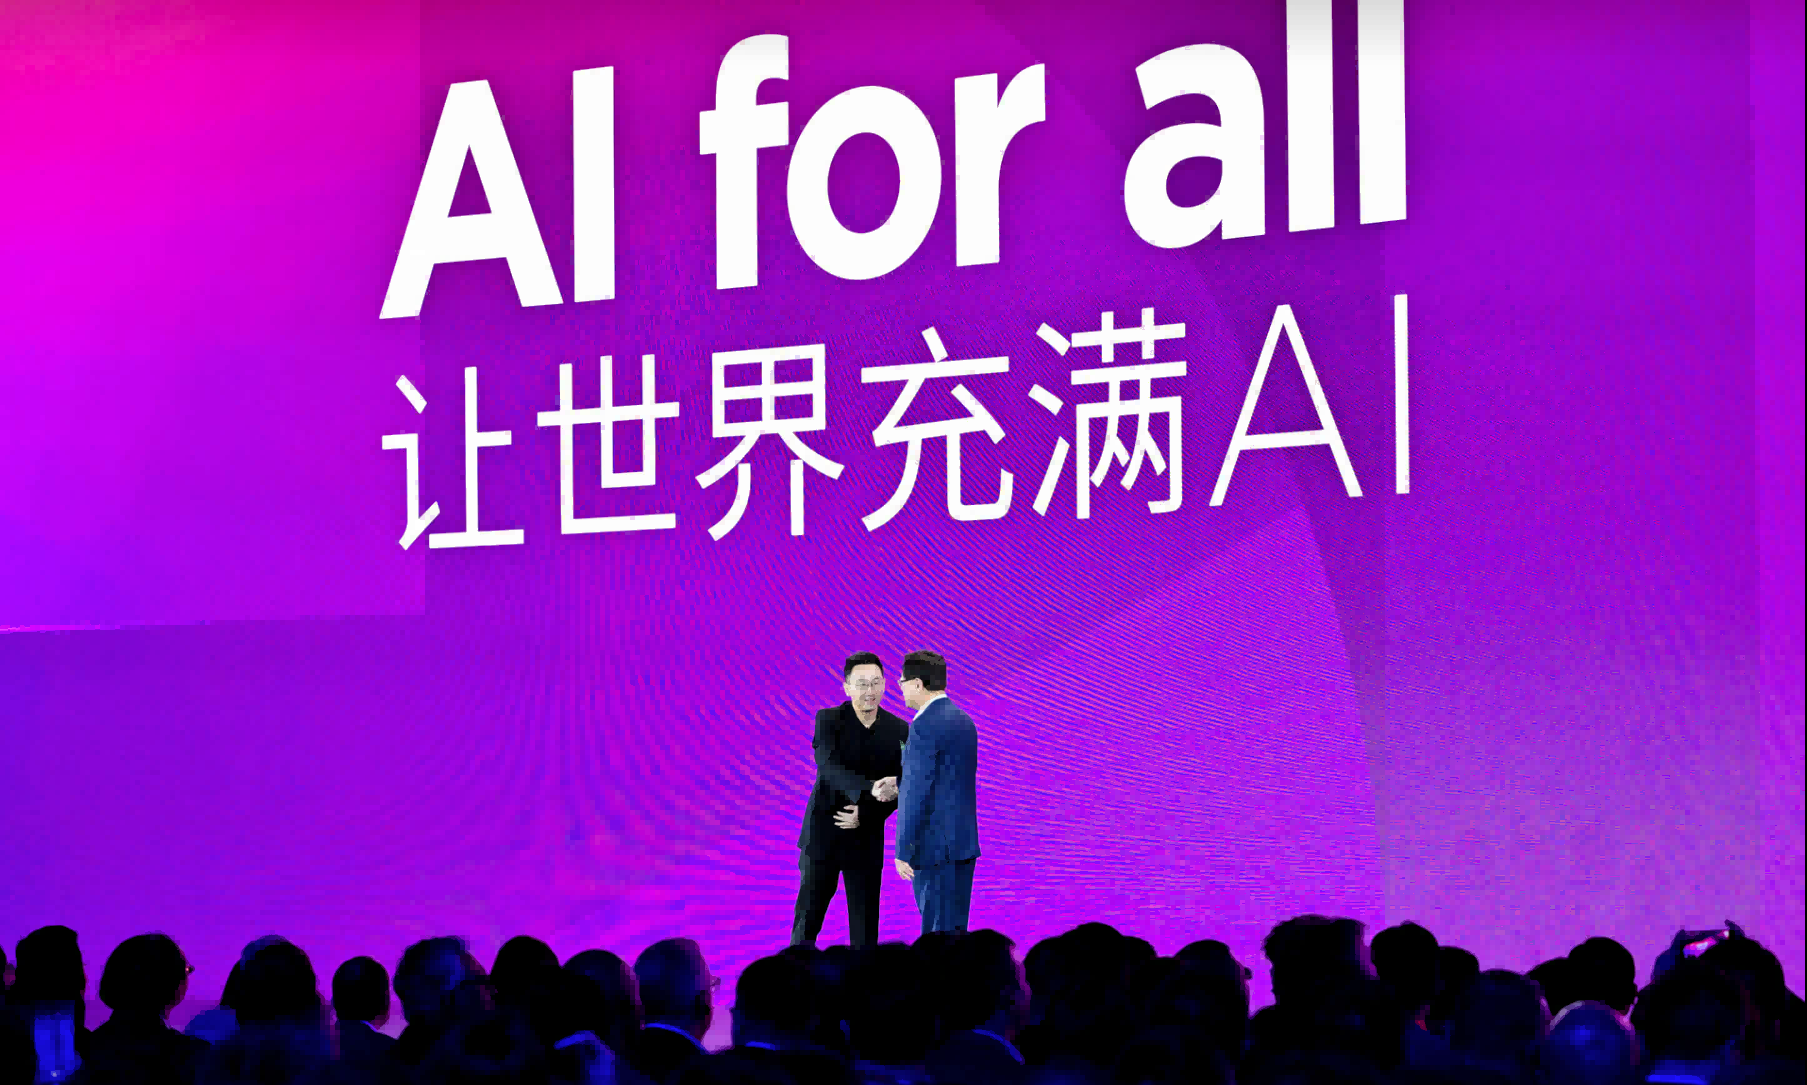 AI catalyzes the trillion-dollar creator economy, injecting new vitality into China’s economy